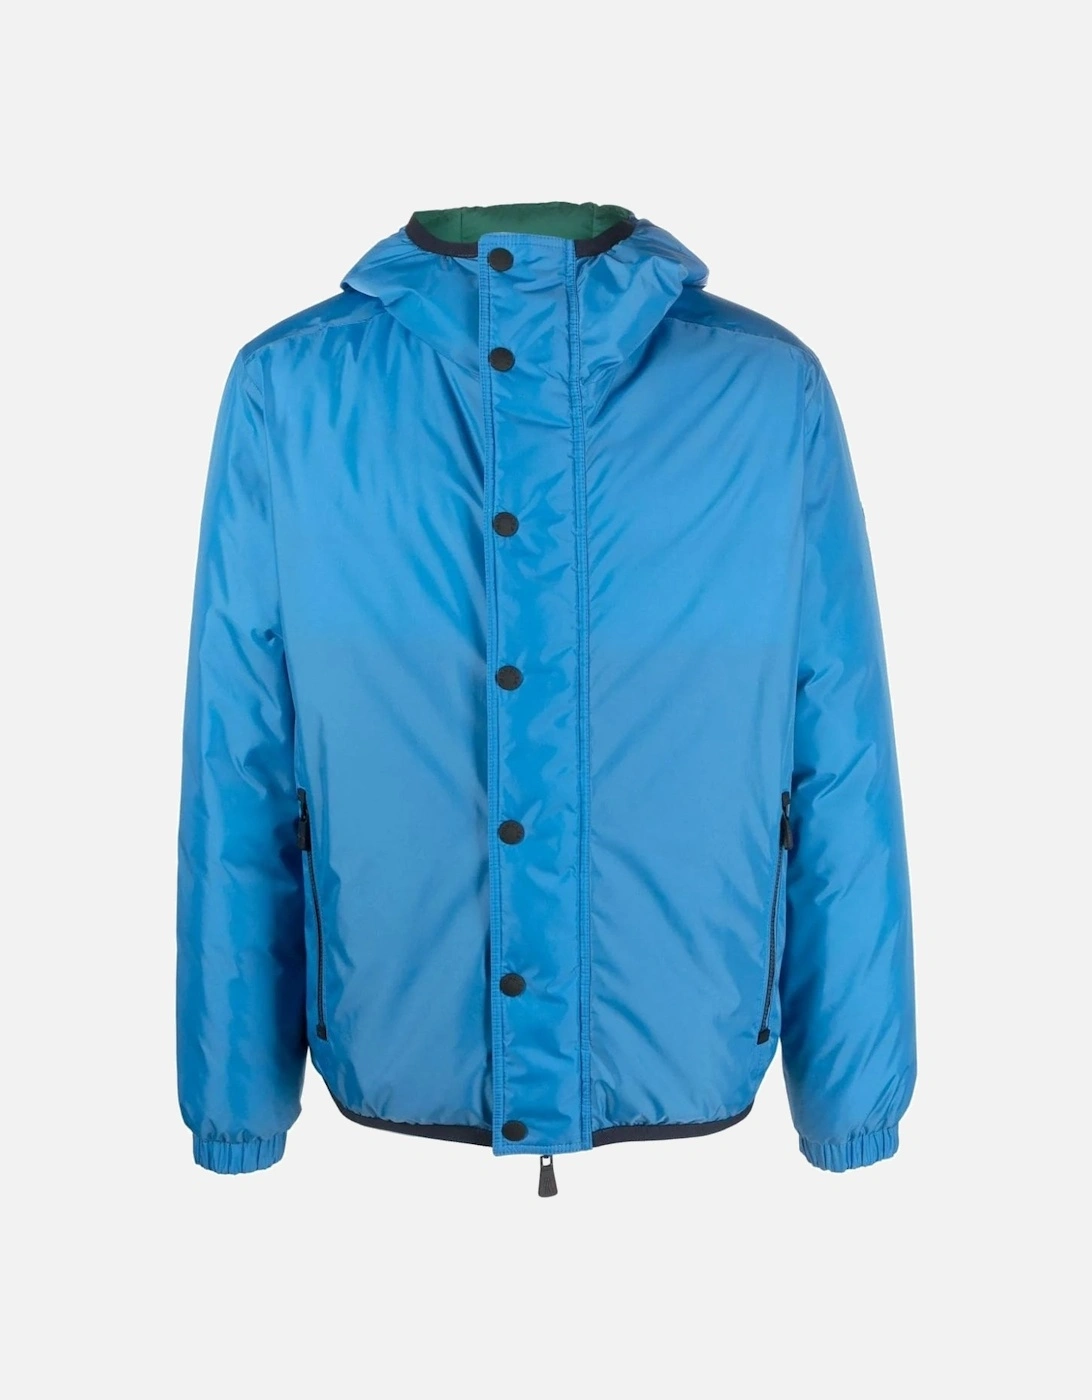 Rosiere Reversible Jacket Blue, 12 of 11